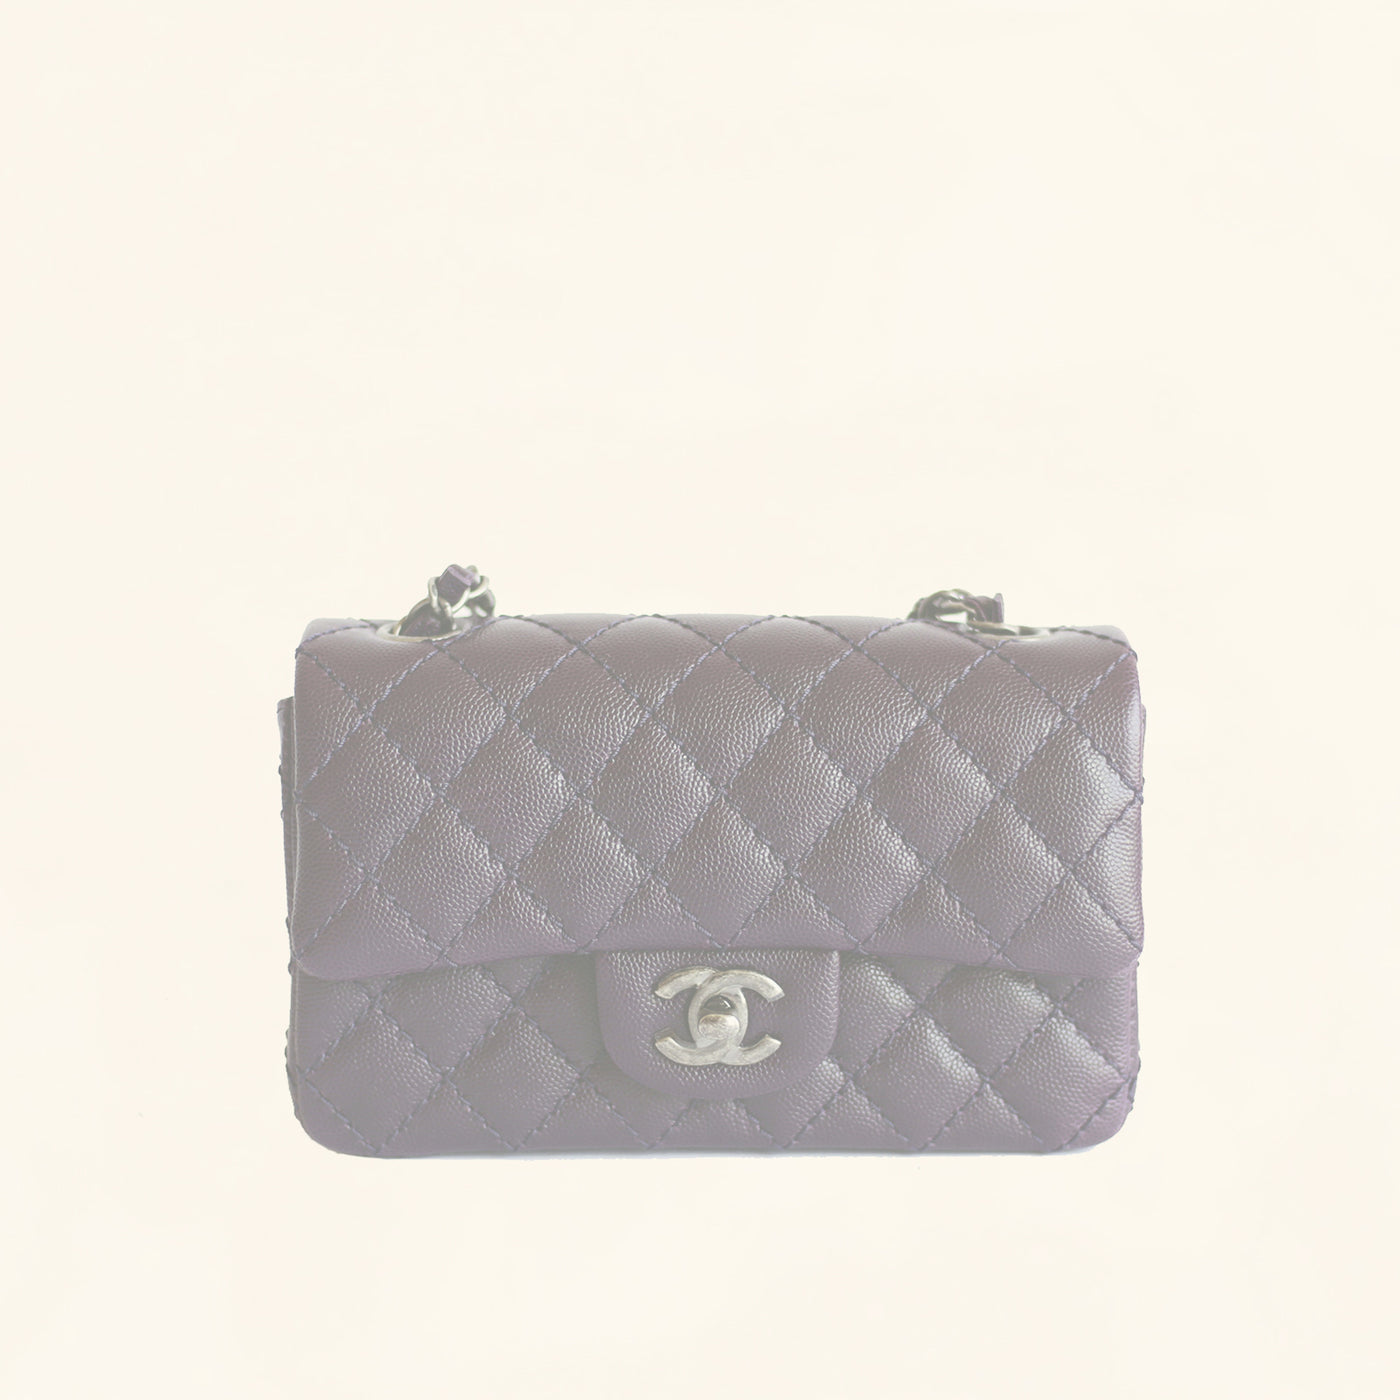 Classic Chanel bag Gm burgundy